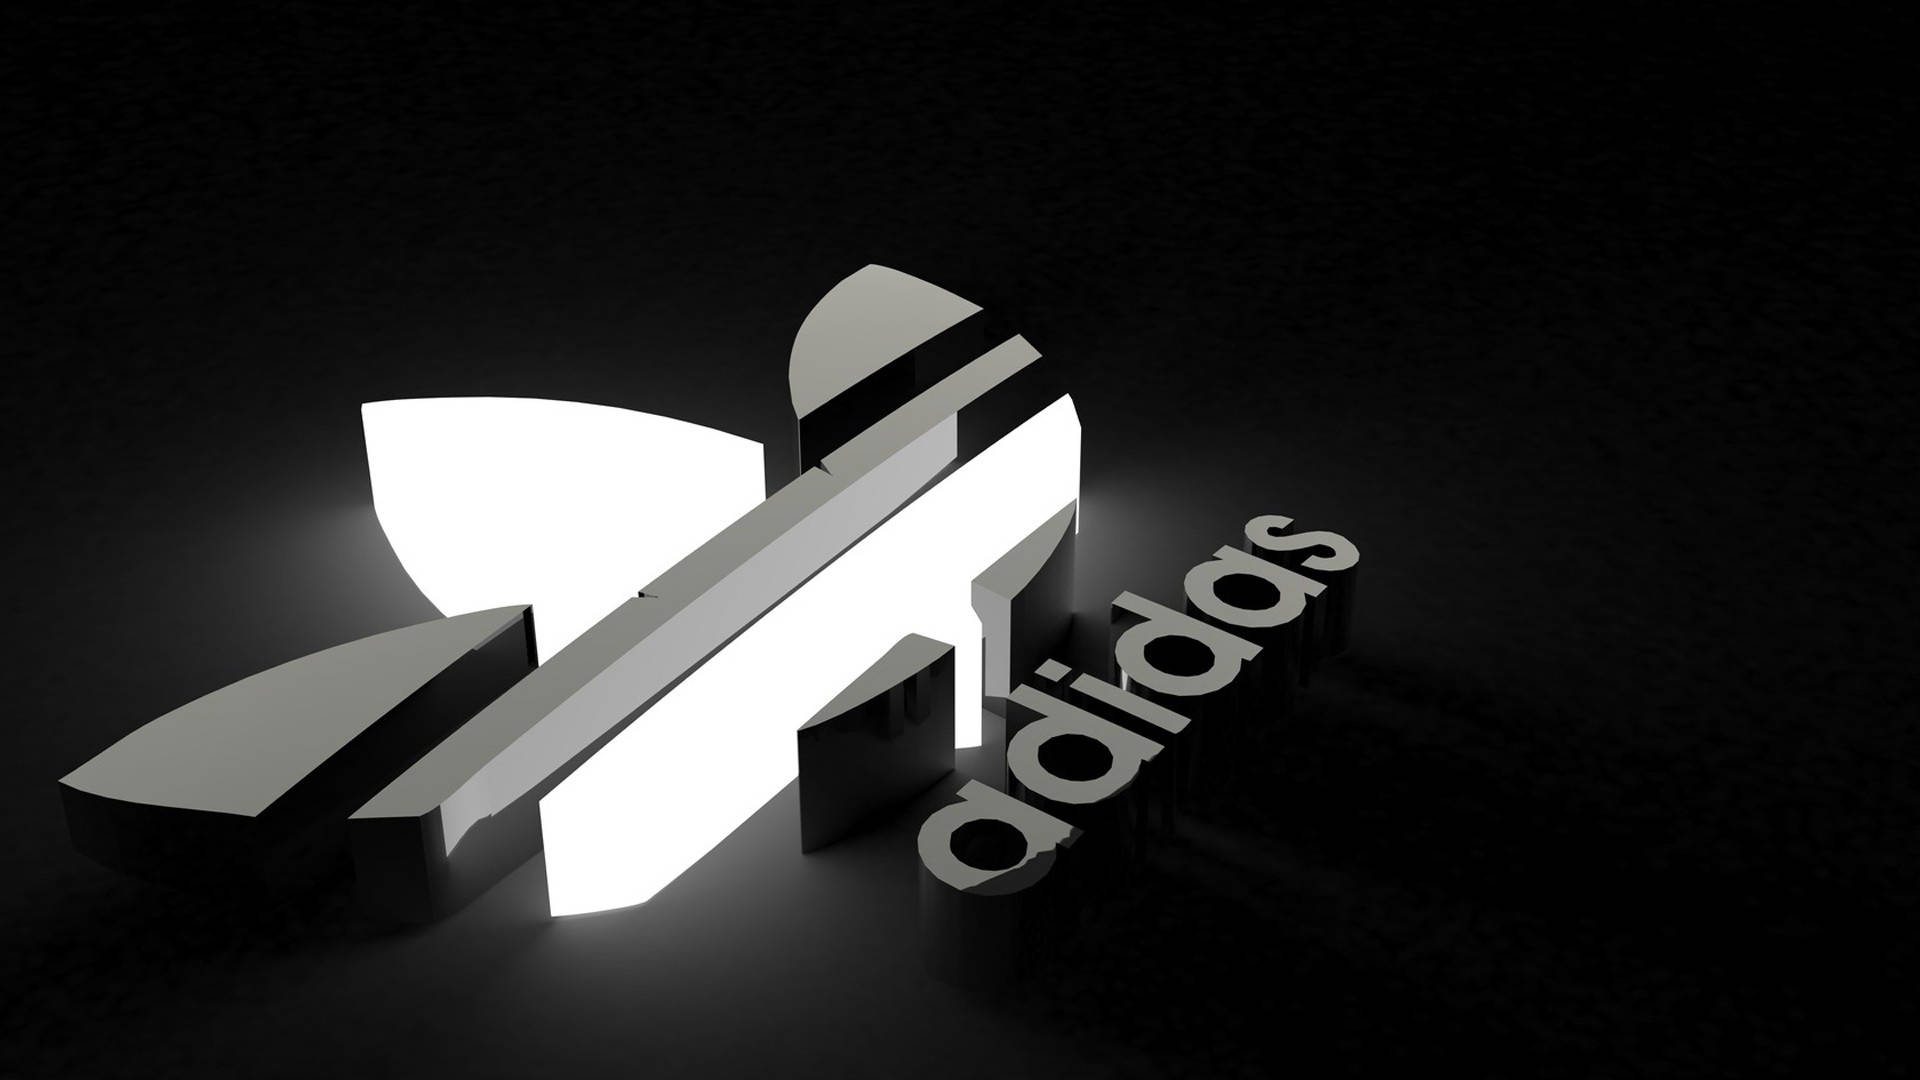 Monochrome Adidas Brand Logo Background